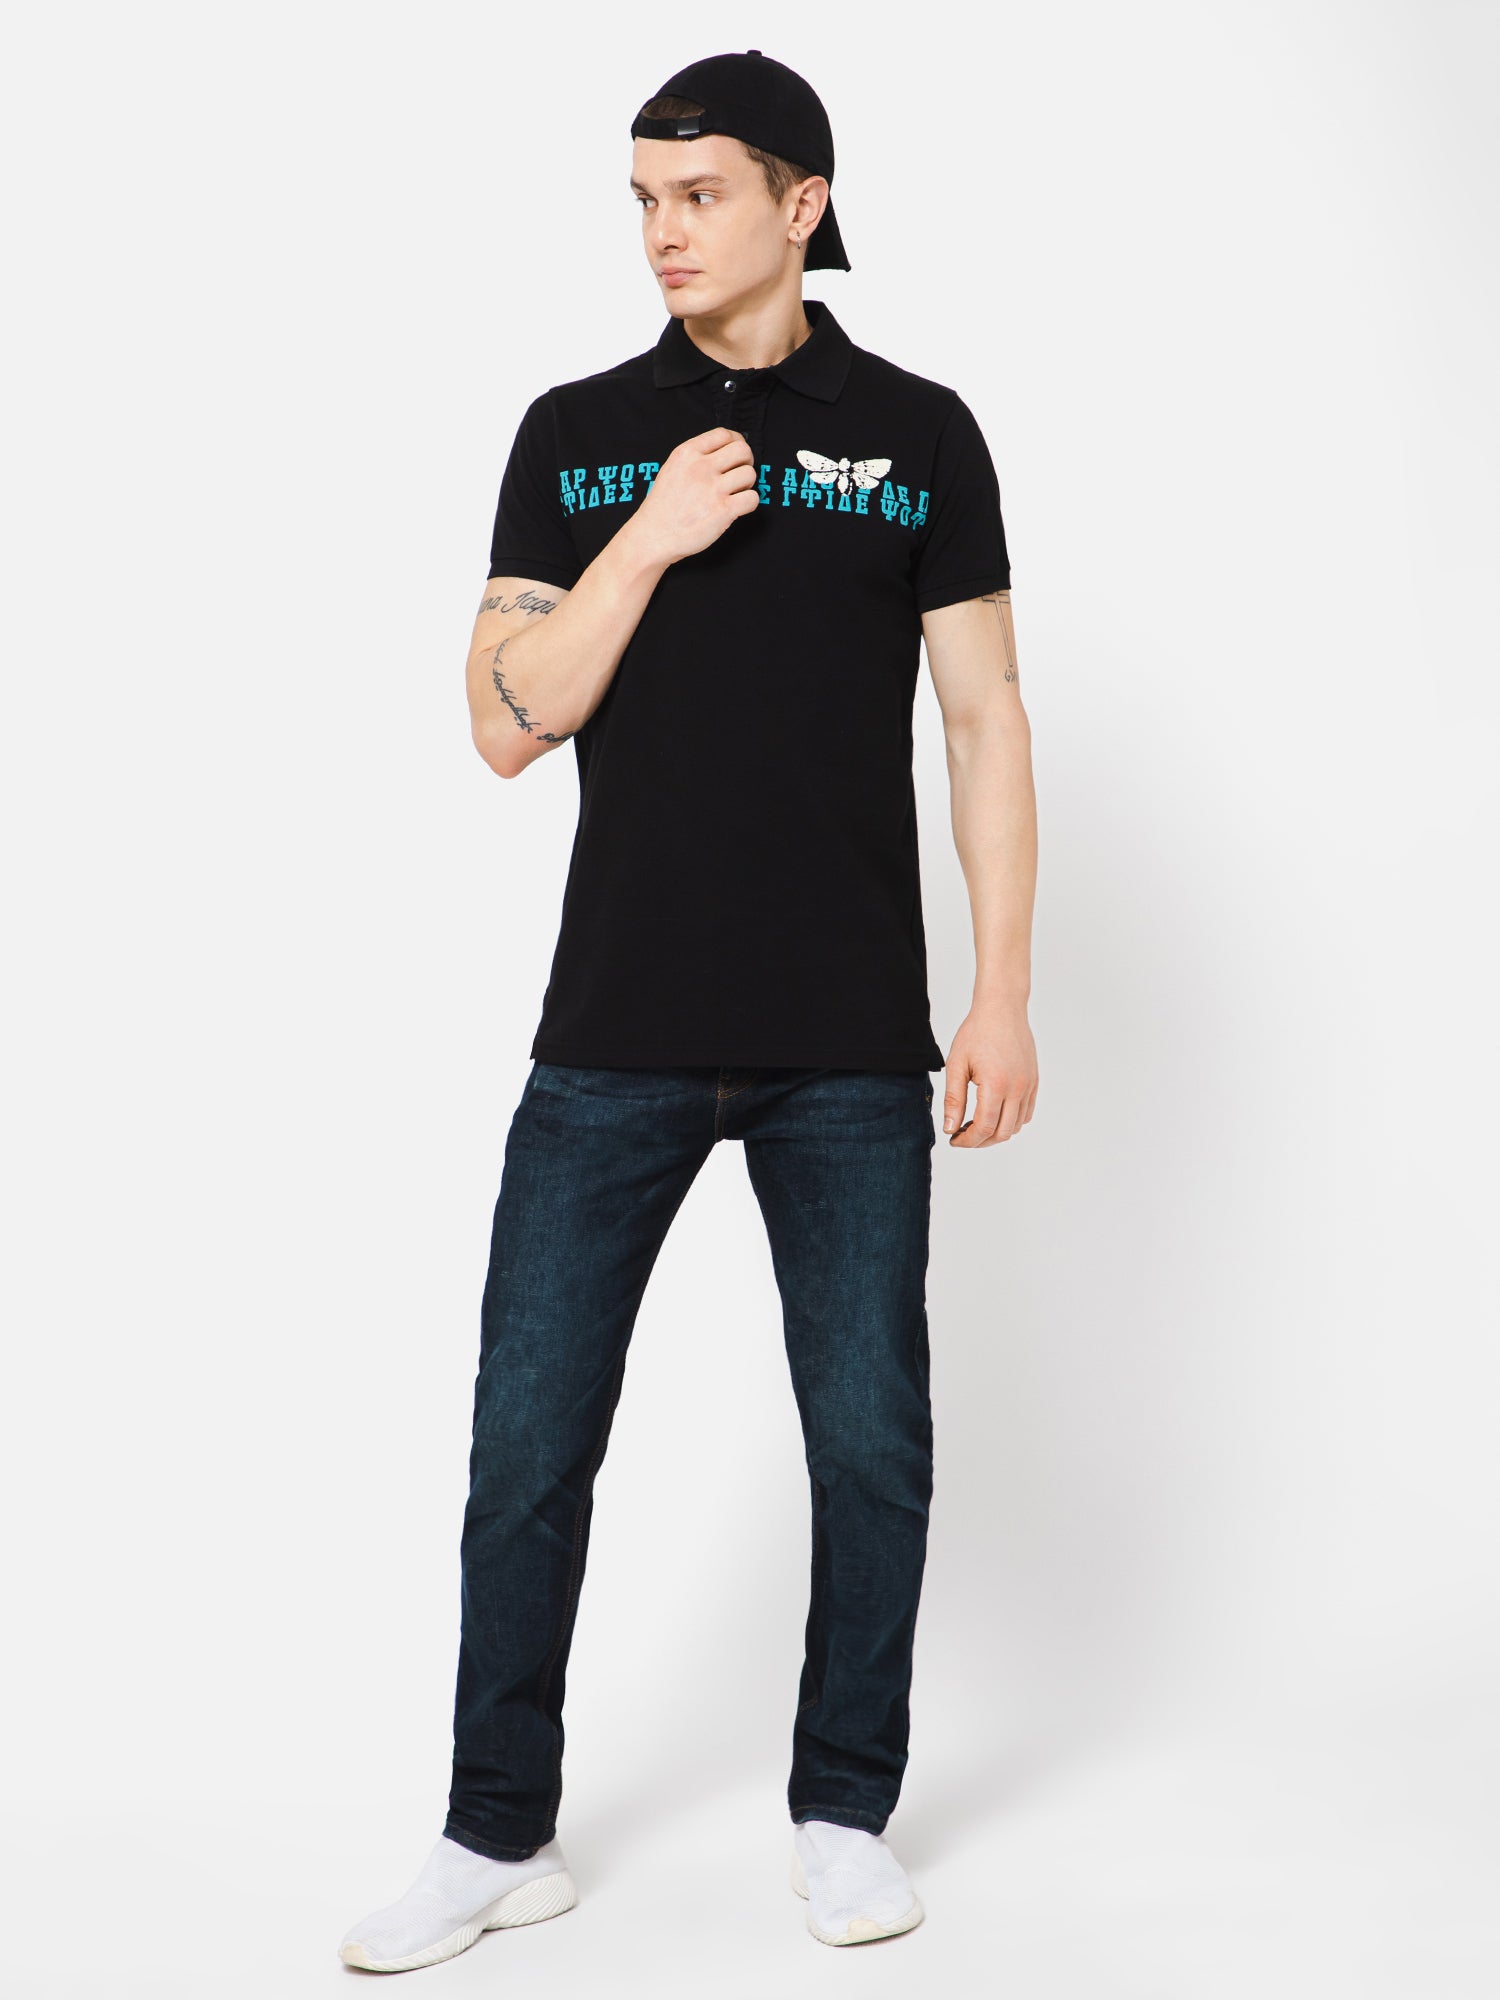 Punk Polo Collar VIKING-SKULL Black T Shirt